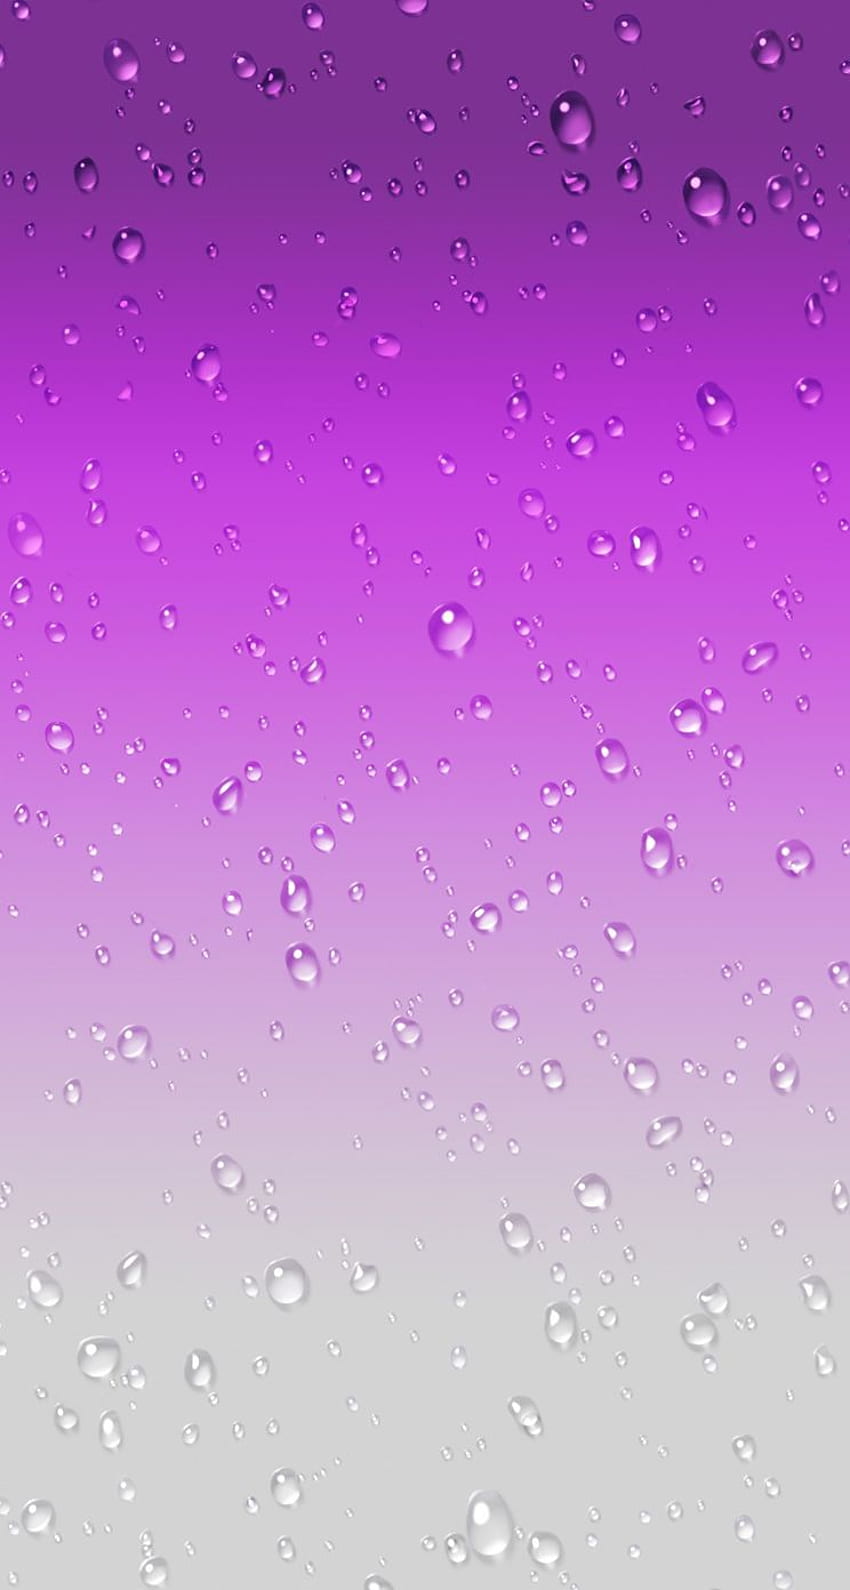 Purple rain Stock Photos Royalty Free Purple rain Images  Depositphotos